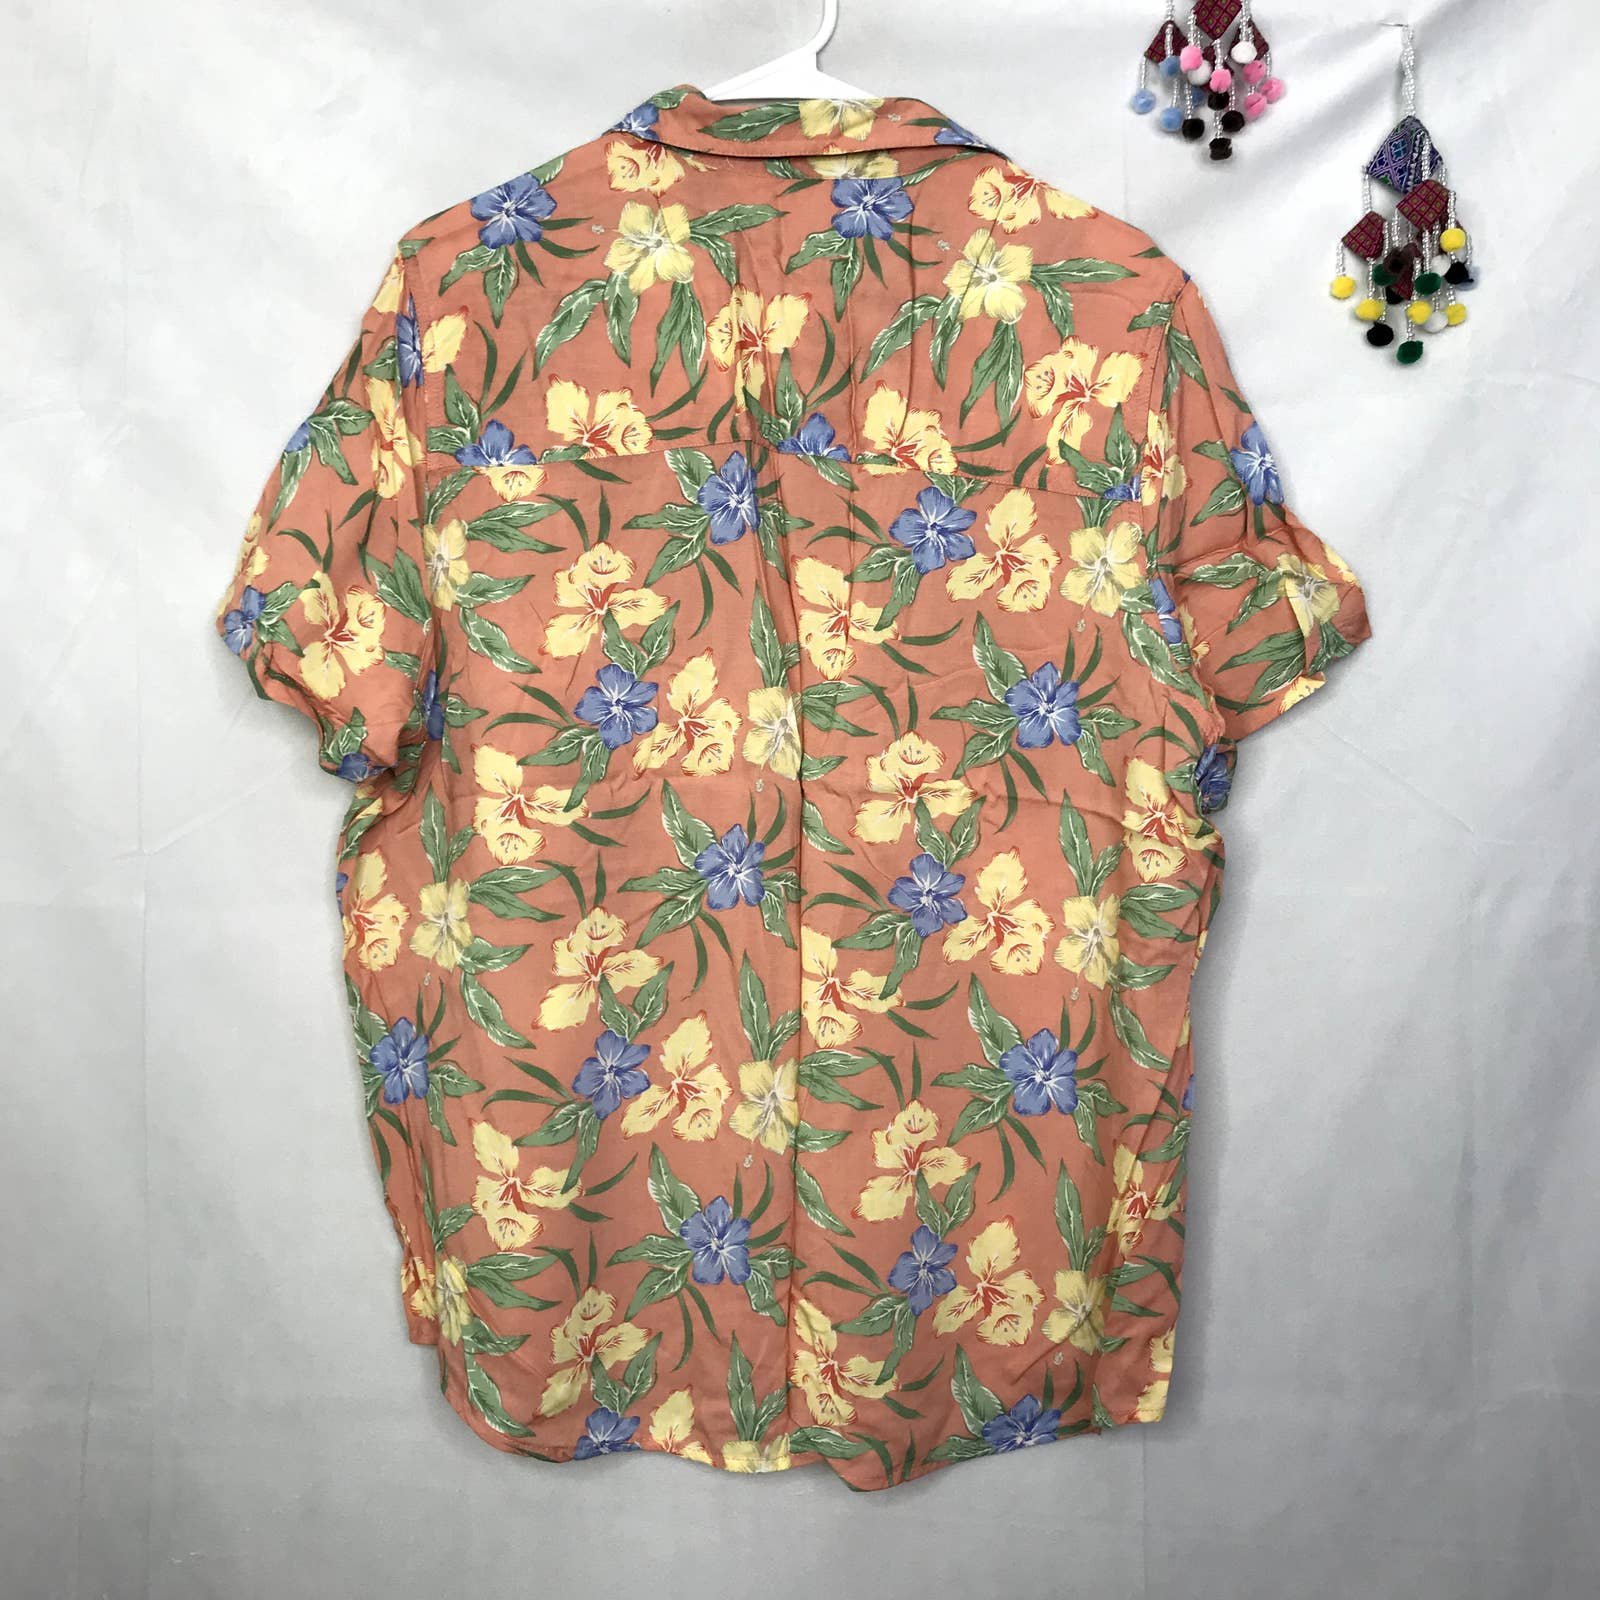 Stylish Vintage Somona tropical floral print short sleeve Hawaiian button down shirt oZihb00y0 New Style